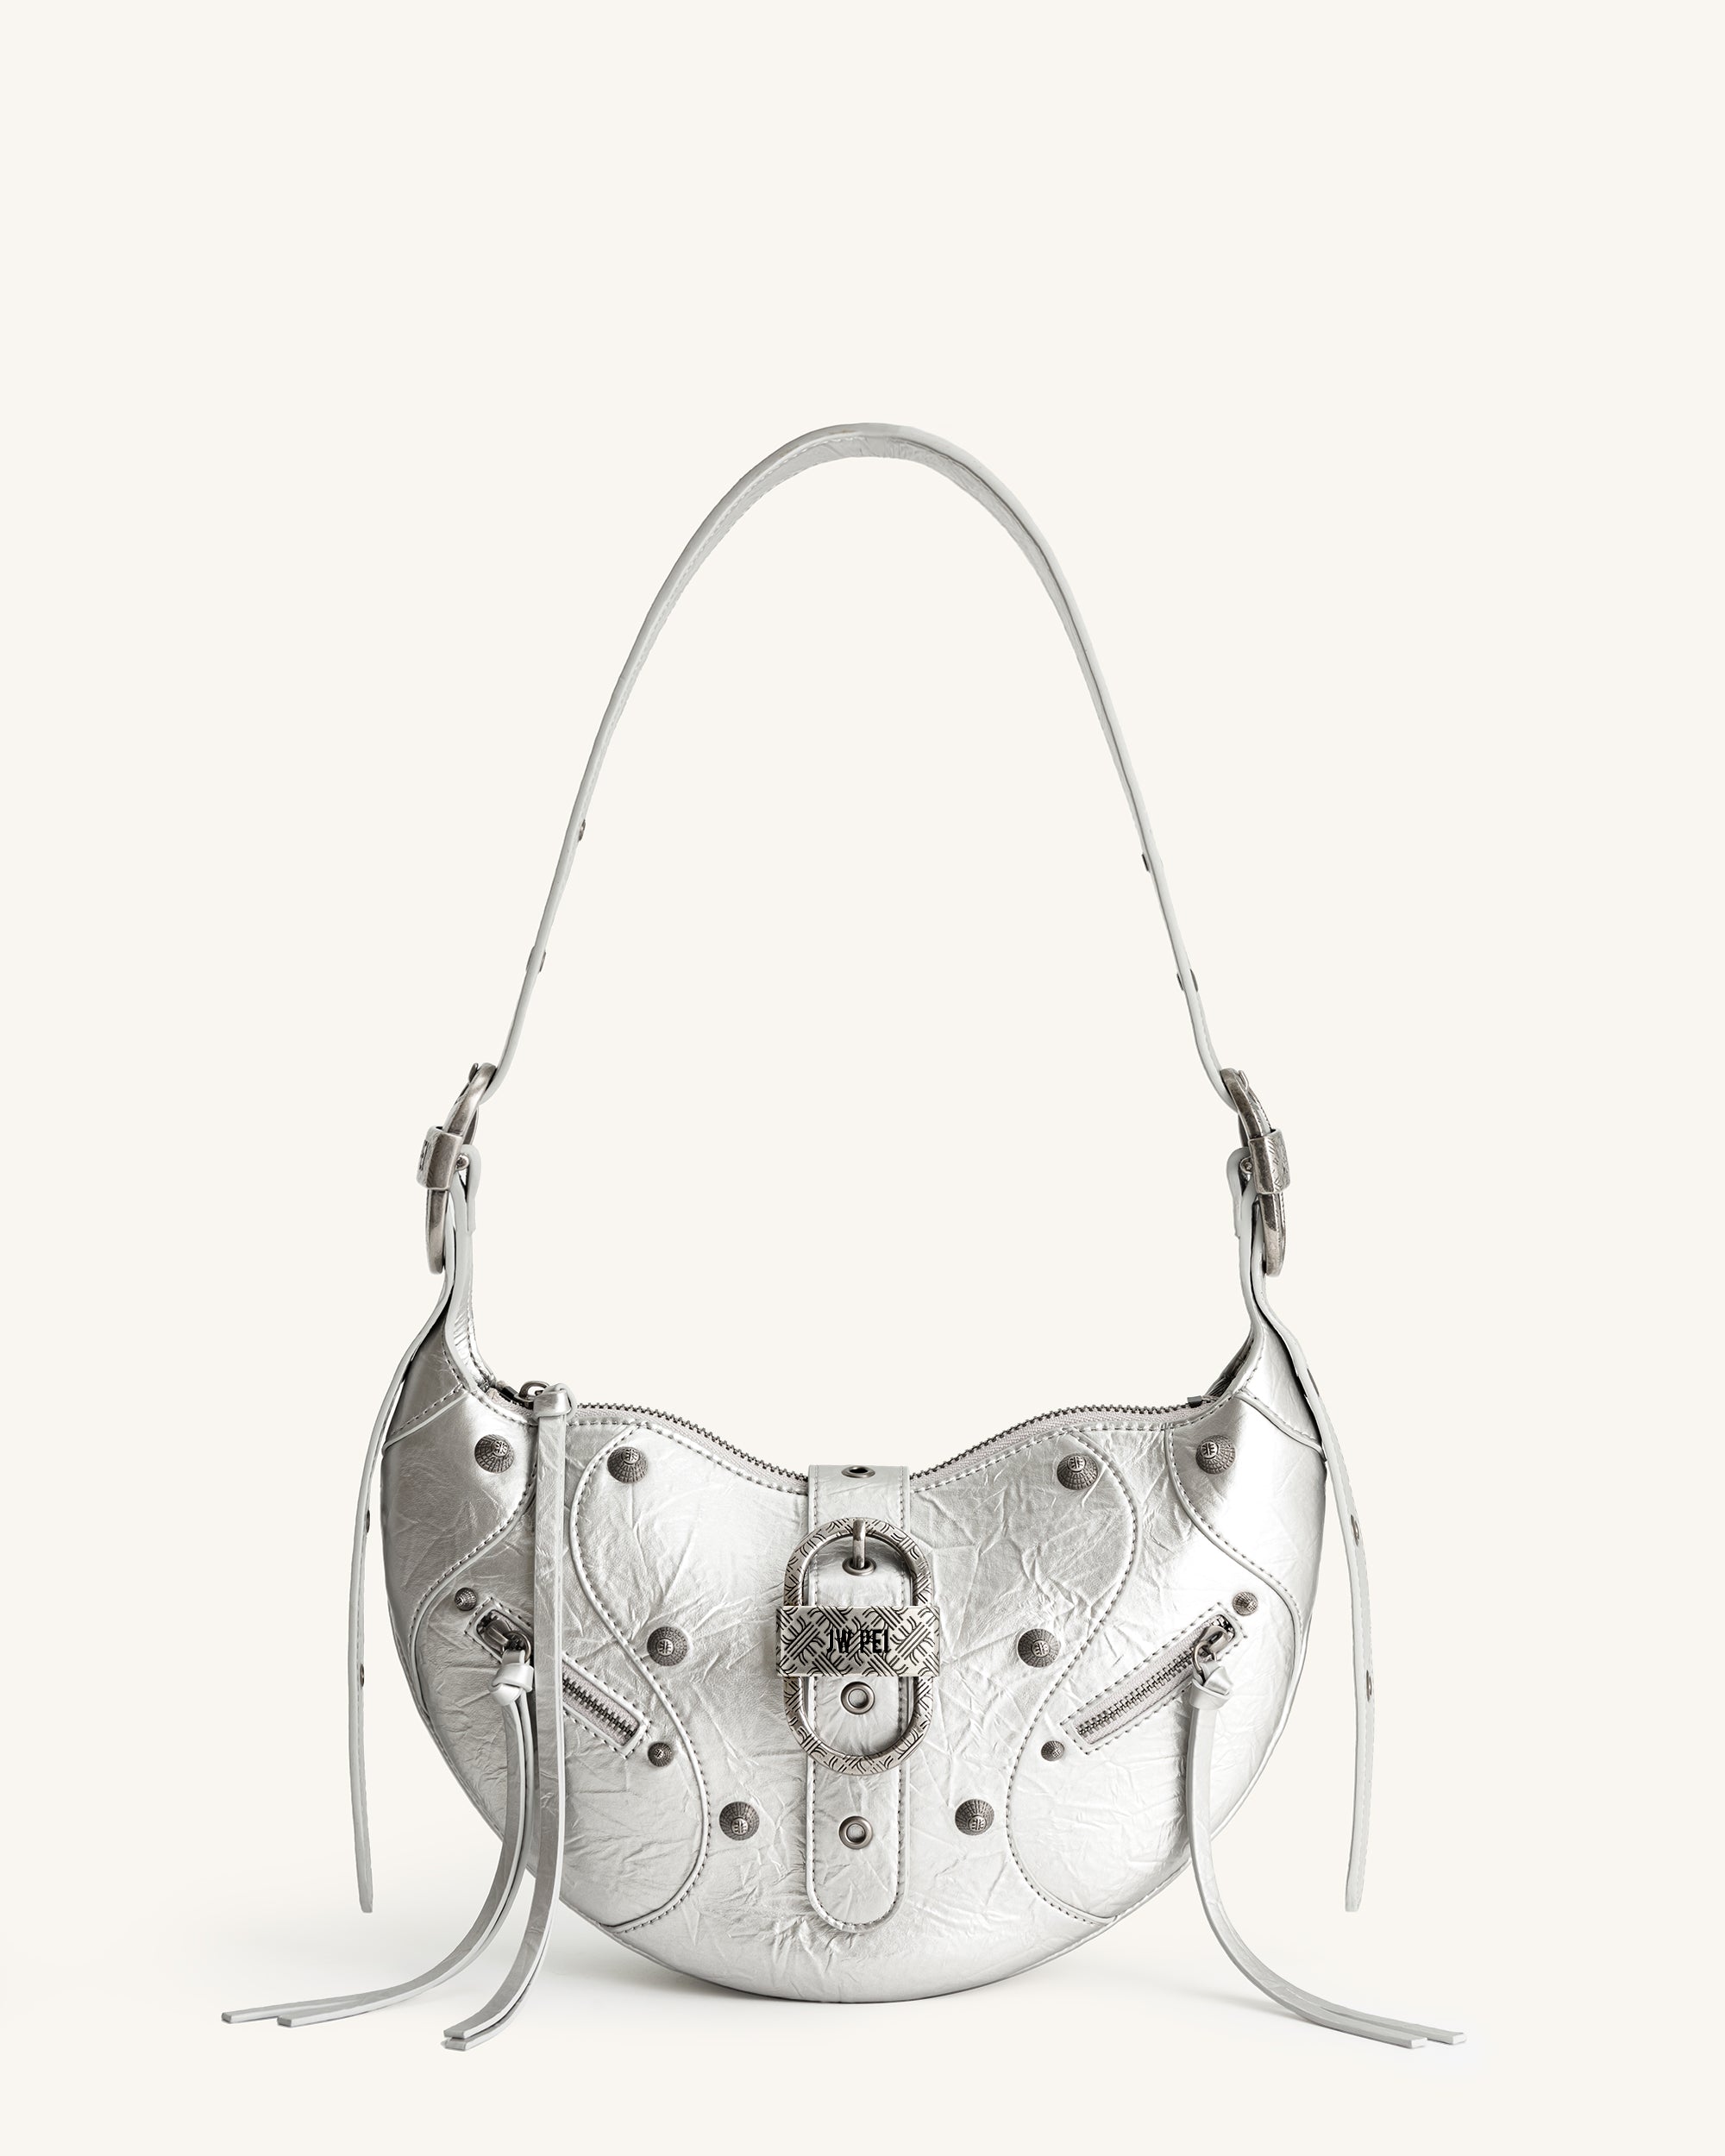 SPECIAL OFFER Metallic pewter faux leather tassel bag & bag strap